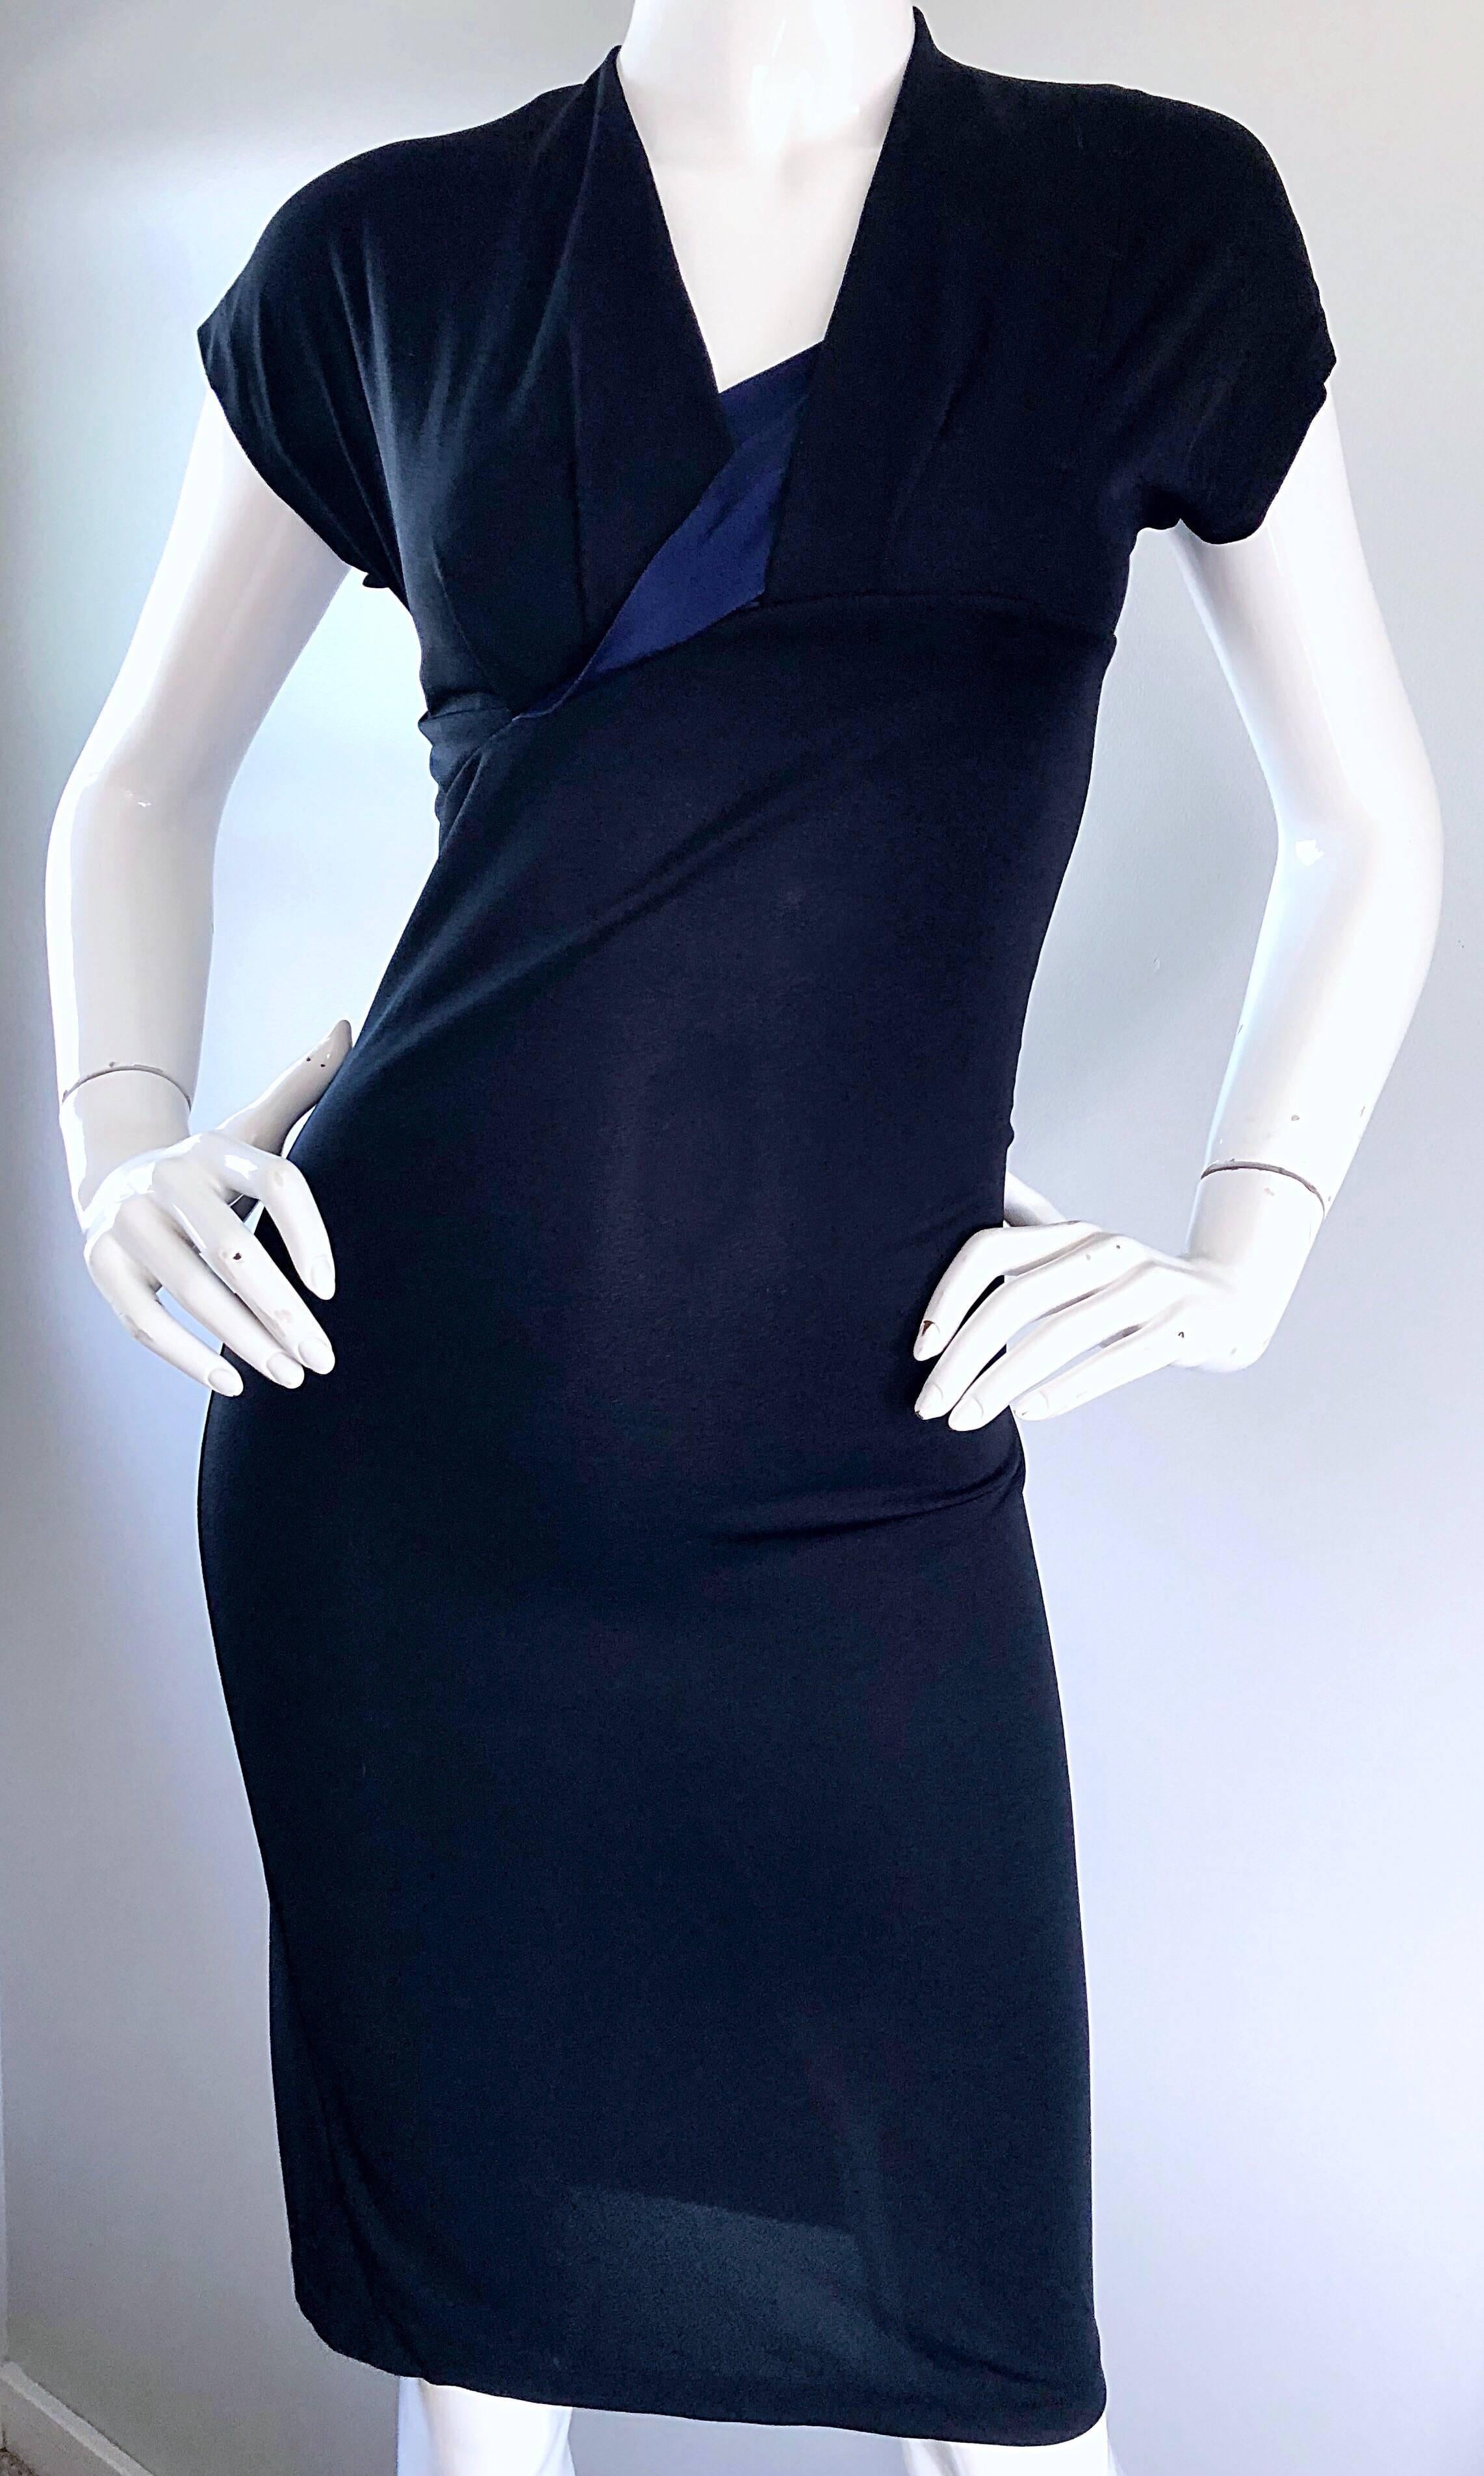 Vintage Salvatore Ferragamo 1990s Black and Navy Blue Jersey Dress Size 40 For Sale 4